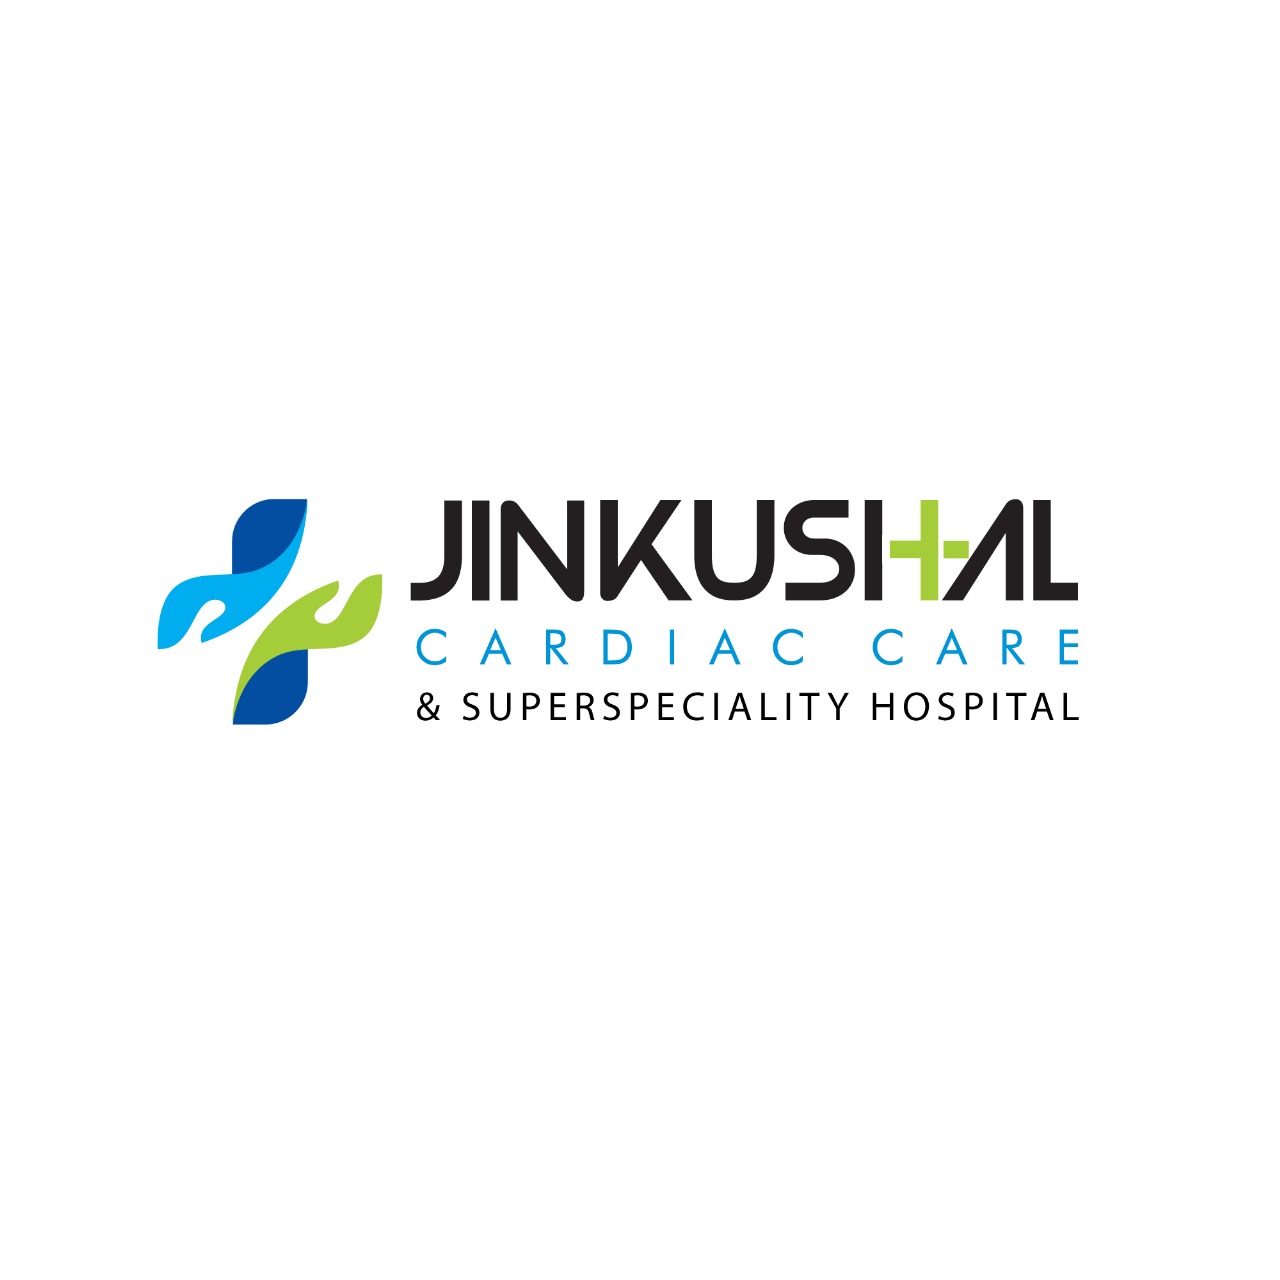 Jinkushal Cardiac Care & Superspeciality Hospital|Hospitals|Medical Services